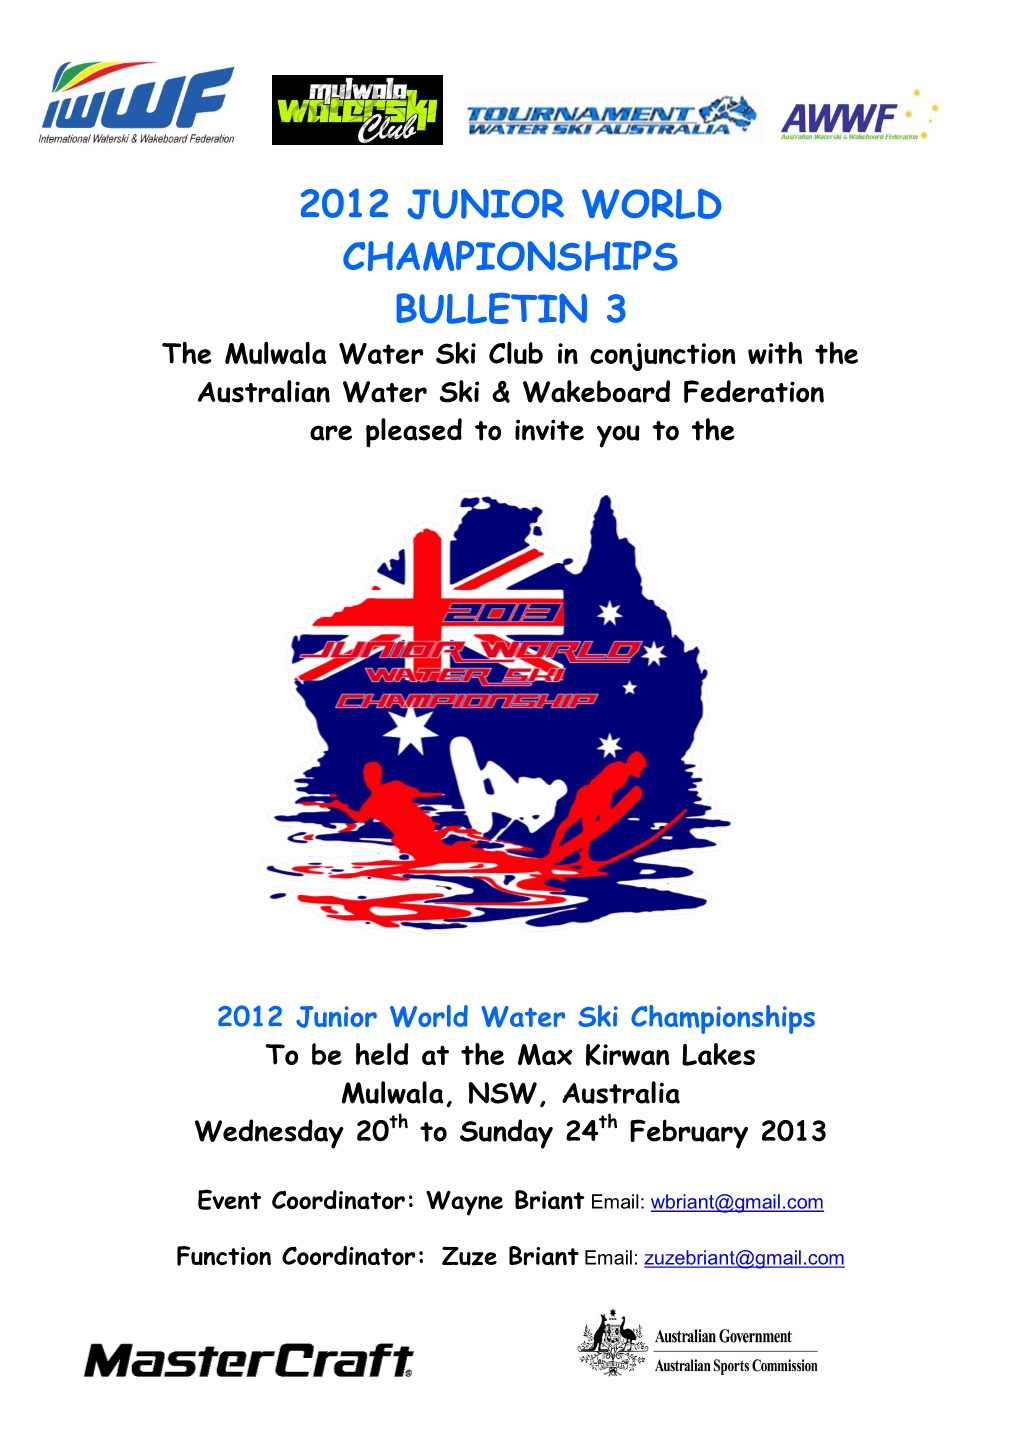 2012 Junior World Championships Bulletin 3